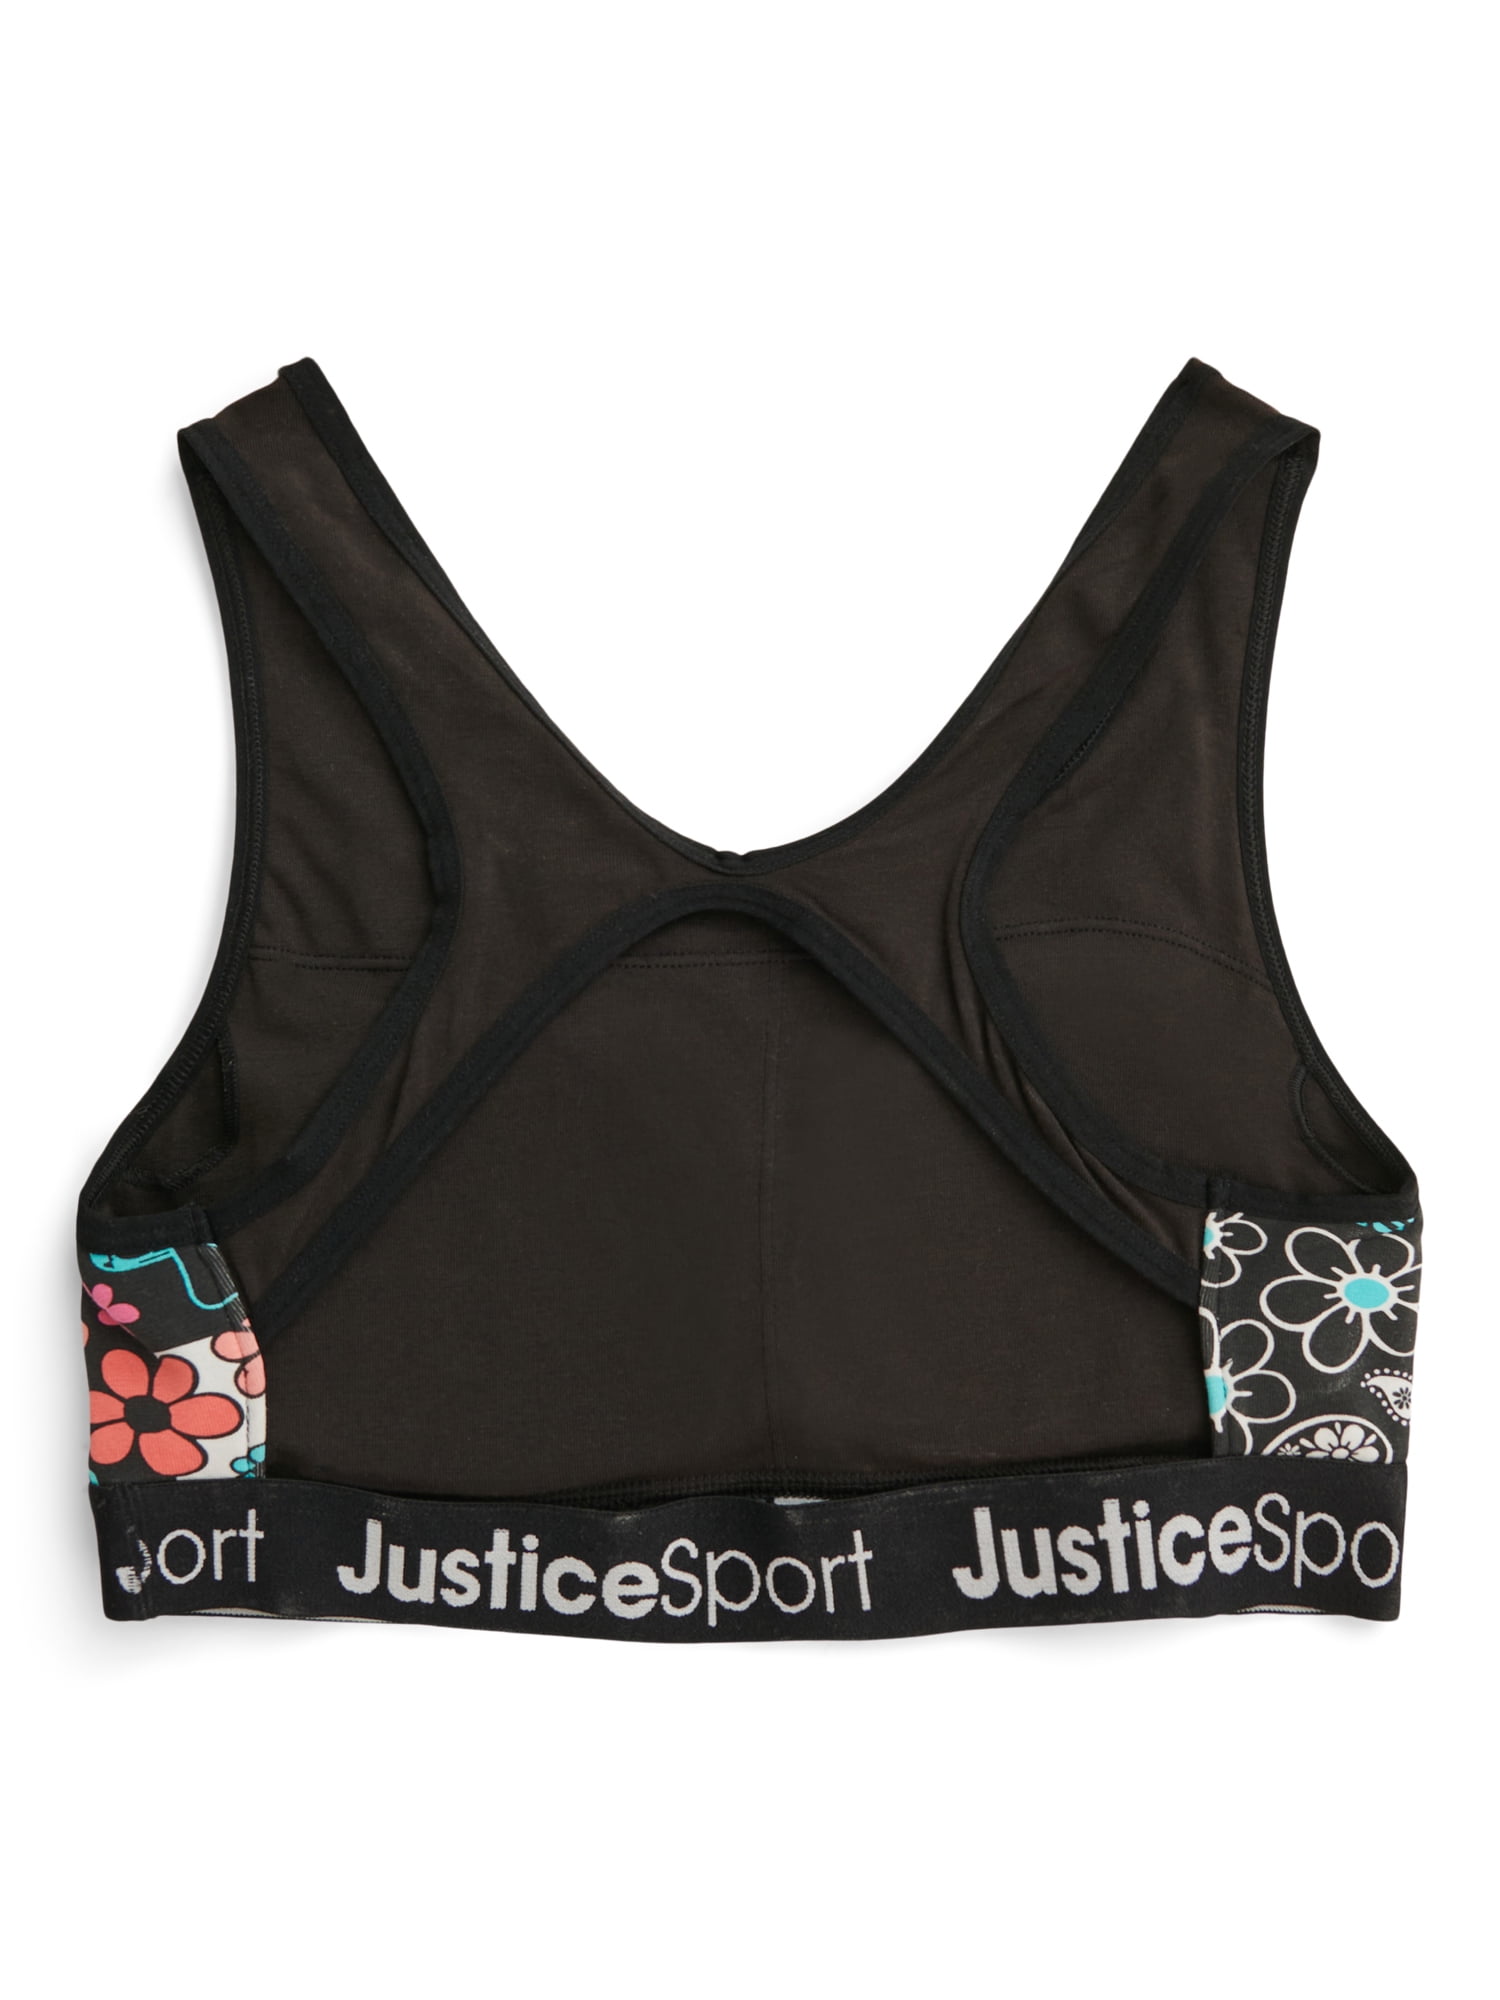 NEW Girl's JUSTICE Sports Bra White Logo 26 28 36 38 Dance Gymnastics Soccer